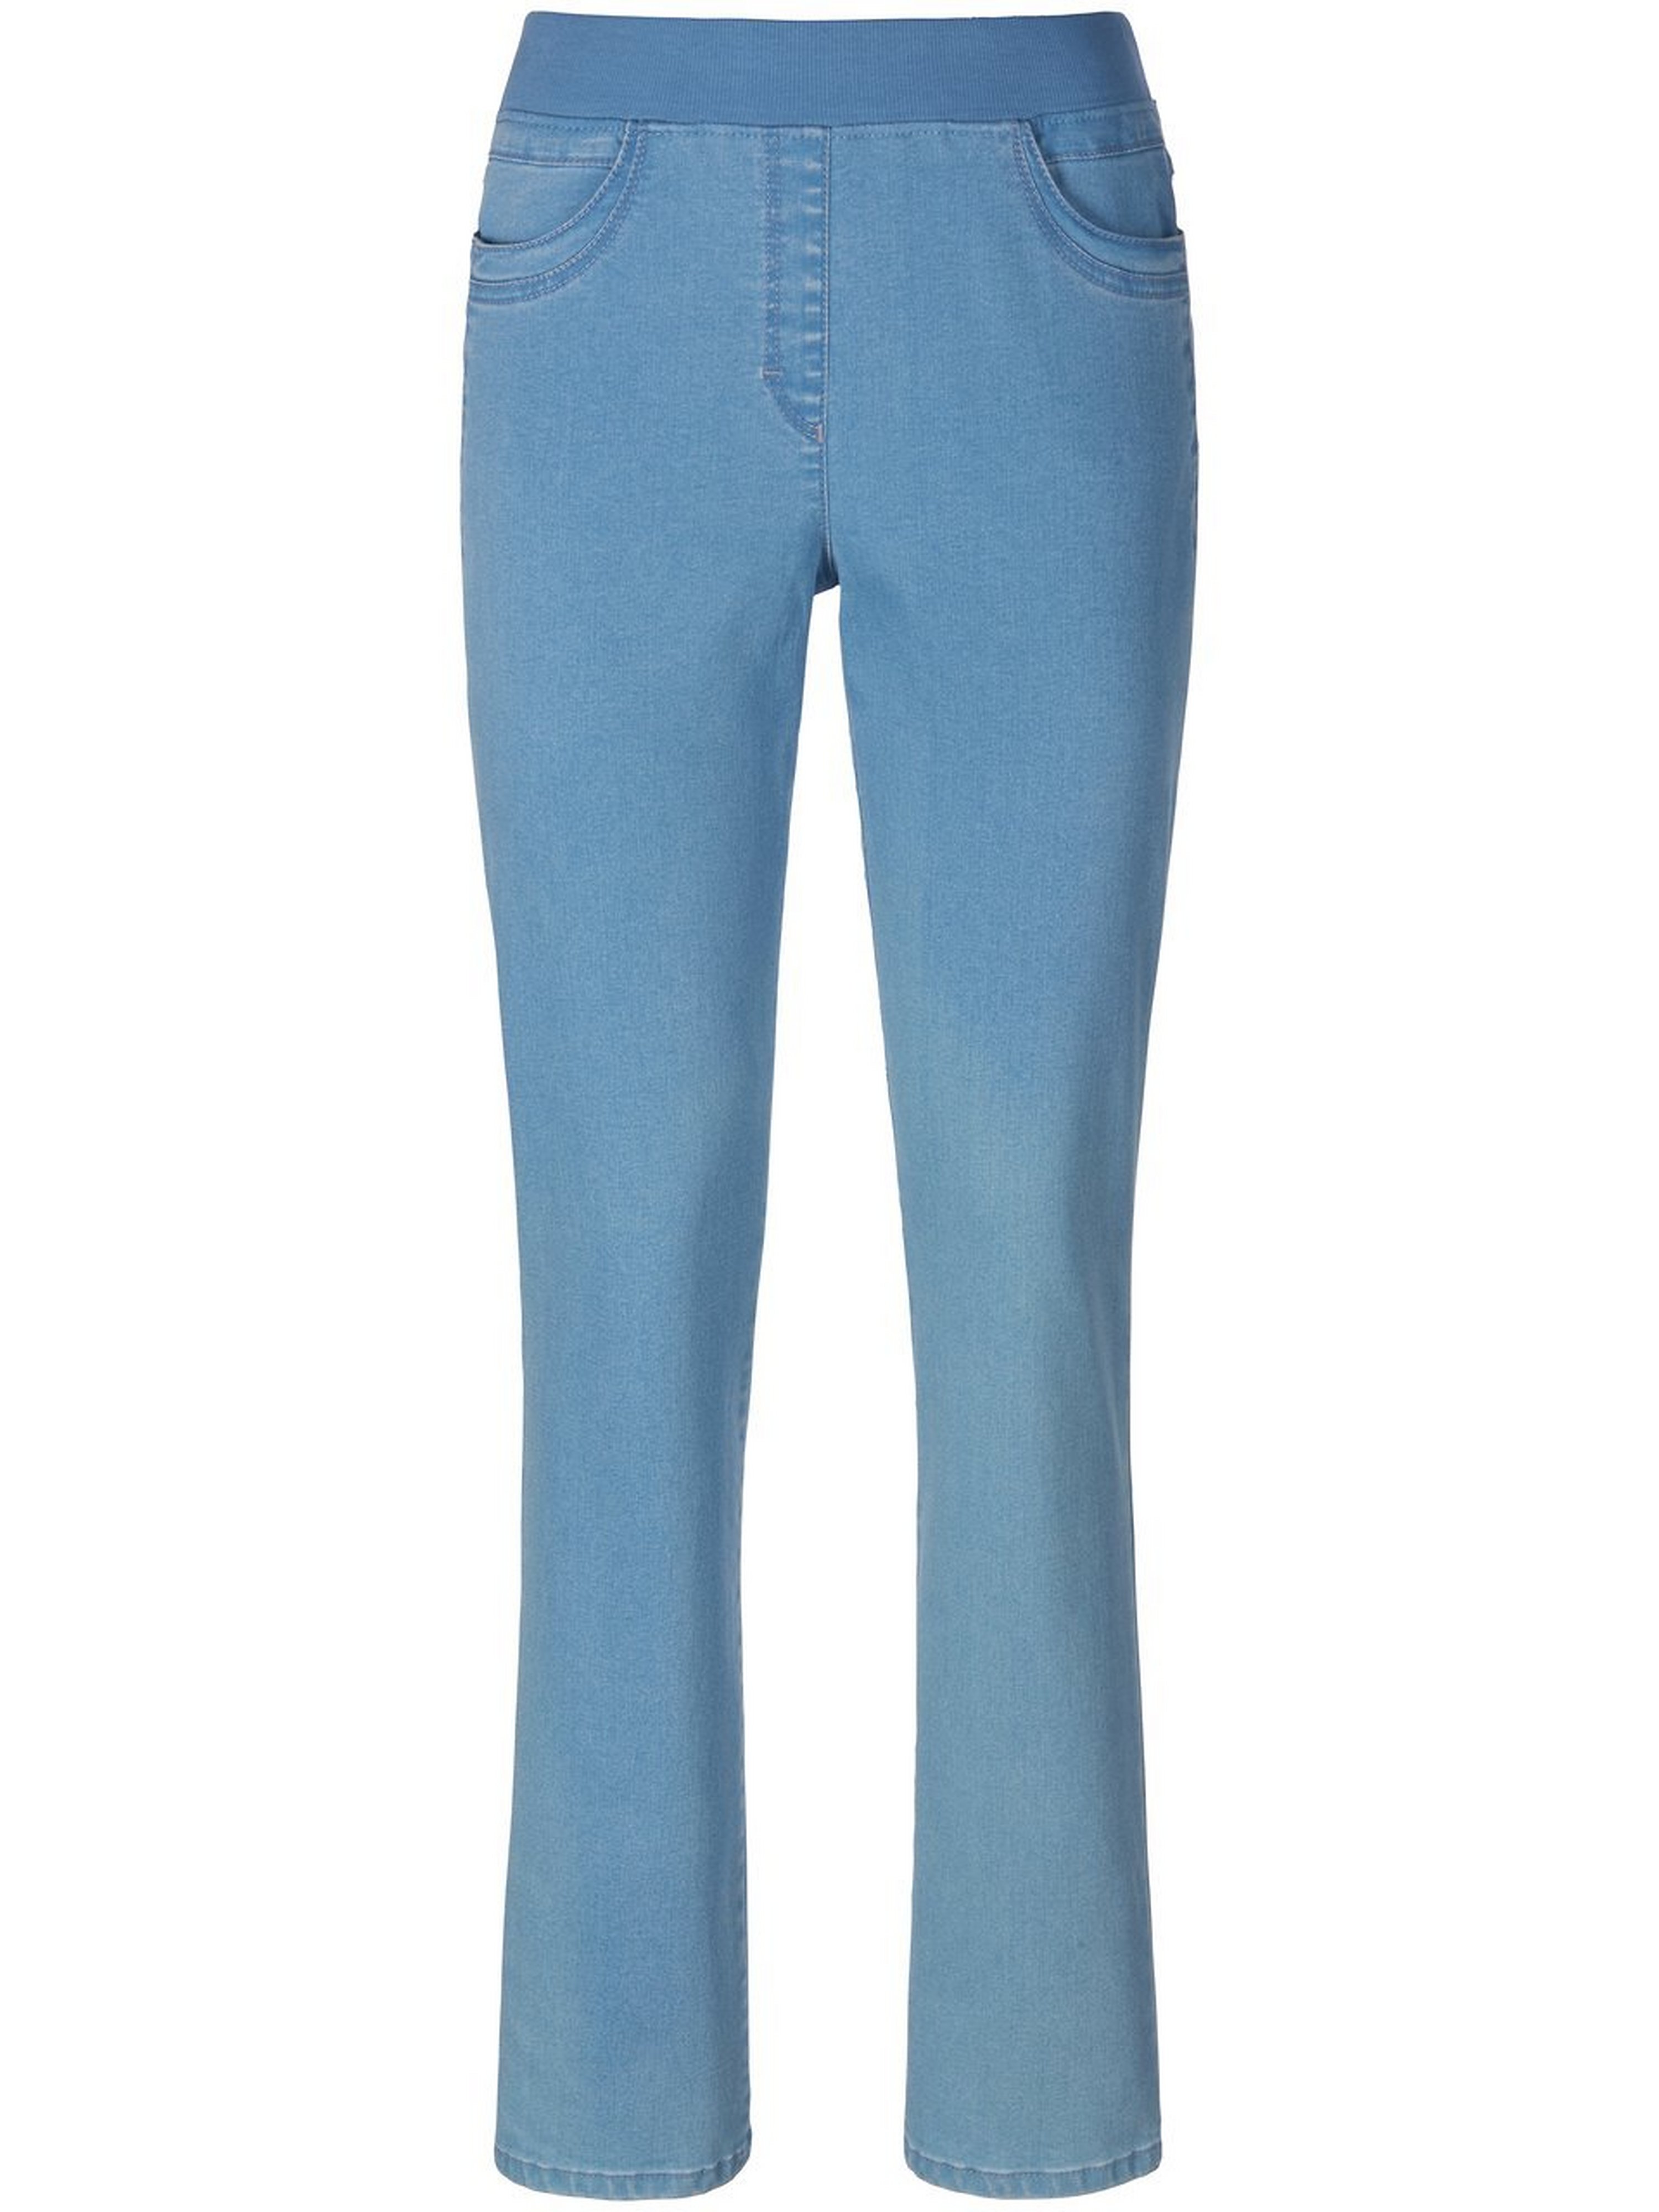 Comfort Plus-jeans model Carina Fun Van Raphaela by Brax denim